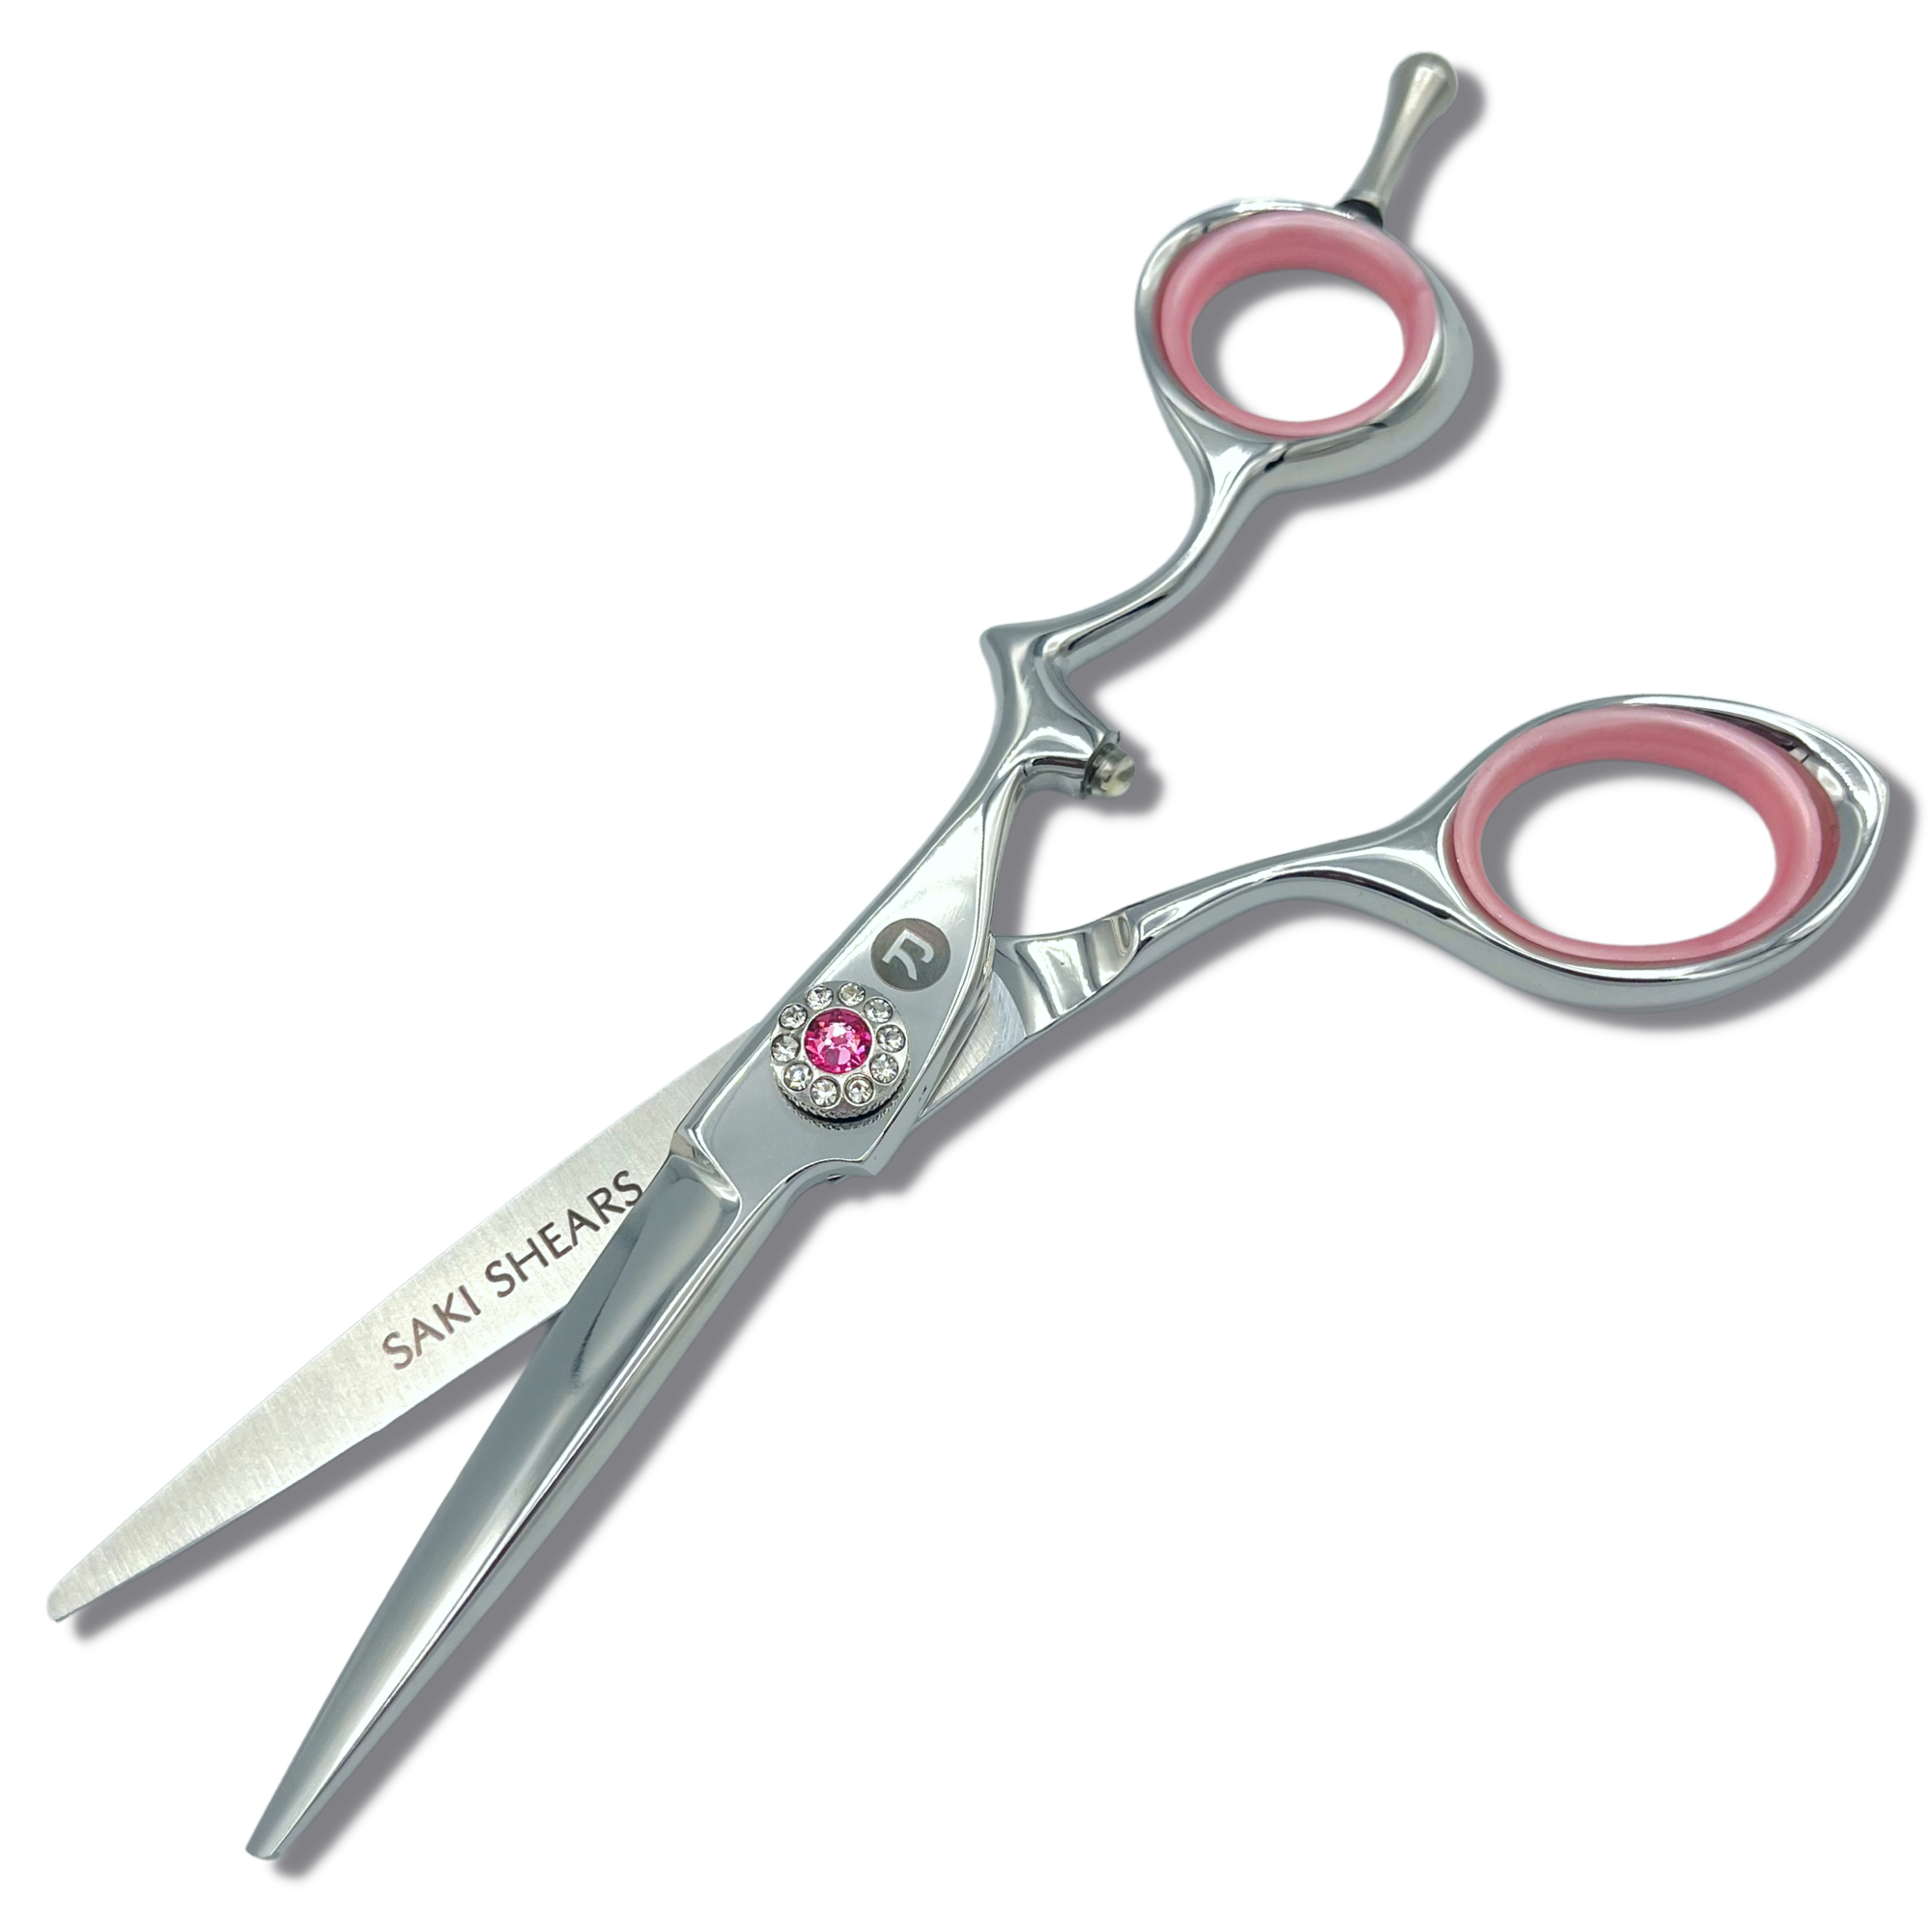 Tomika Hair Cutting Shears/Scissors